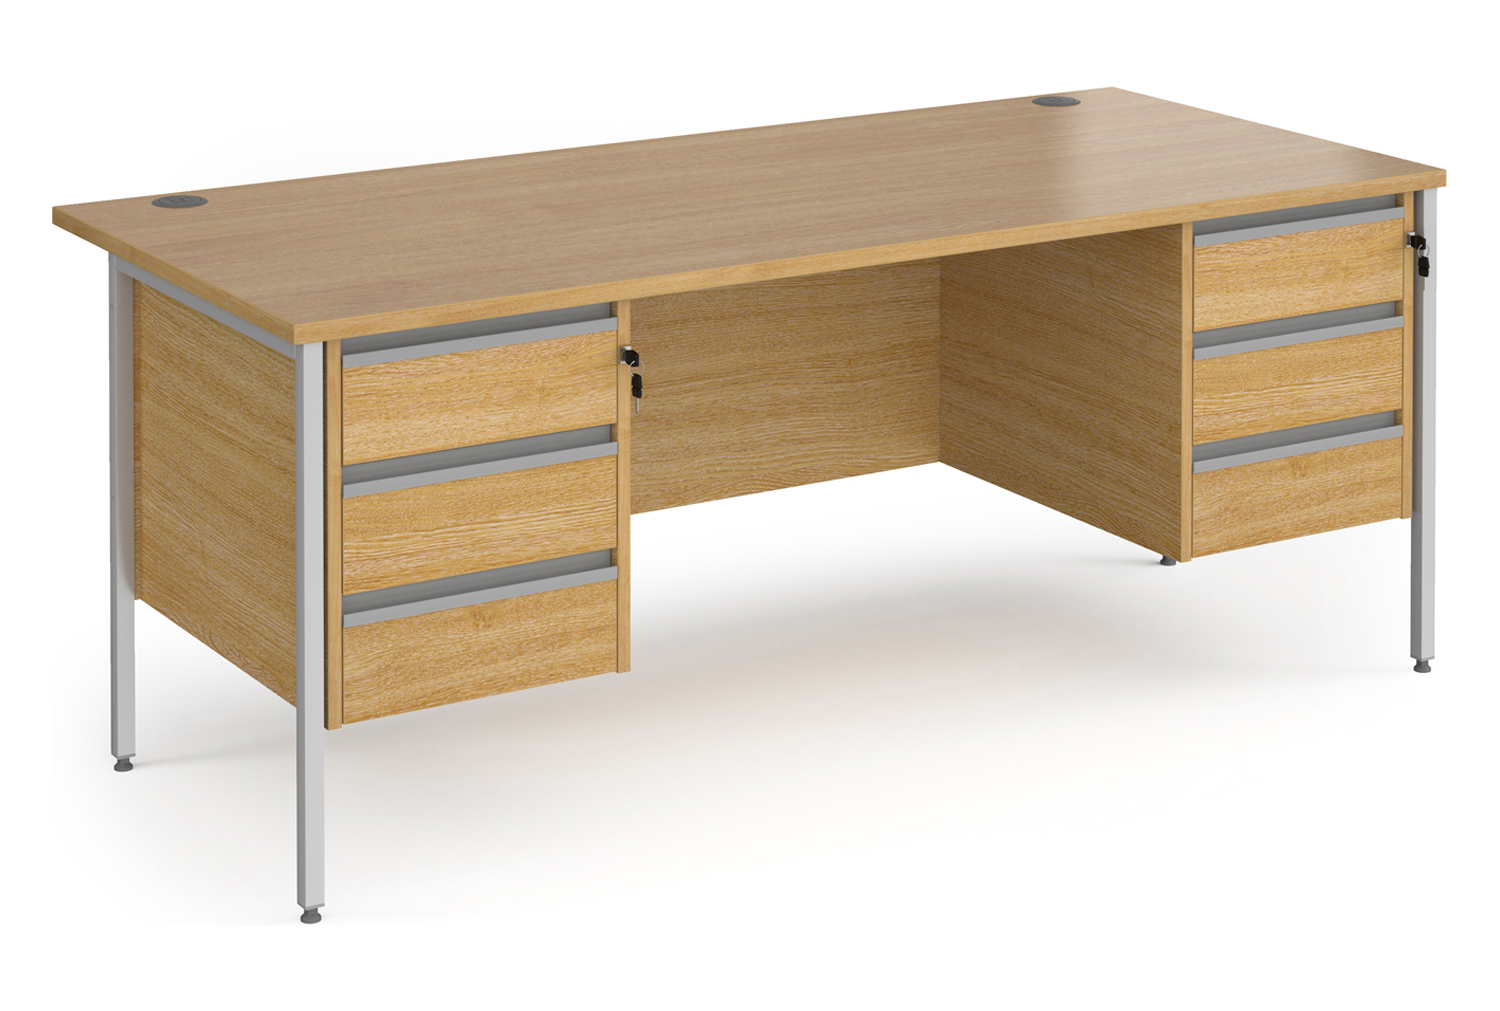 Value Line Classic+ Rectangular H-Leg Office Desk 3+3 Drawers (Silver Leg), 180wx80dx73h (cm), Oak